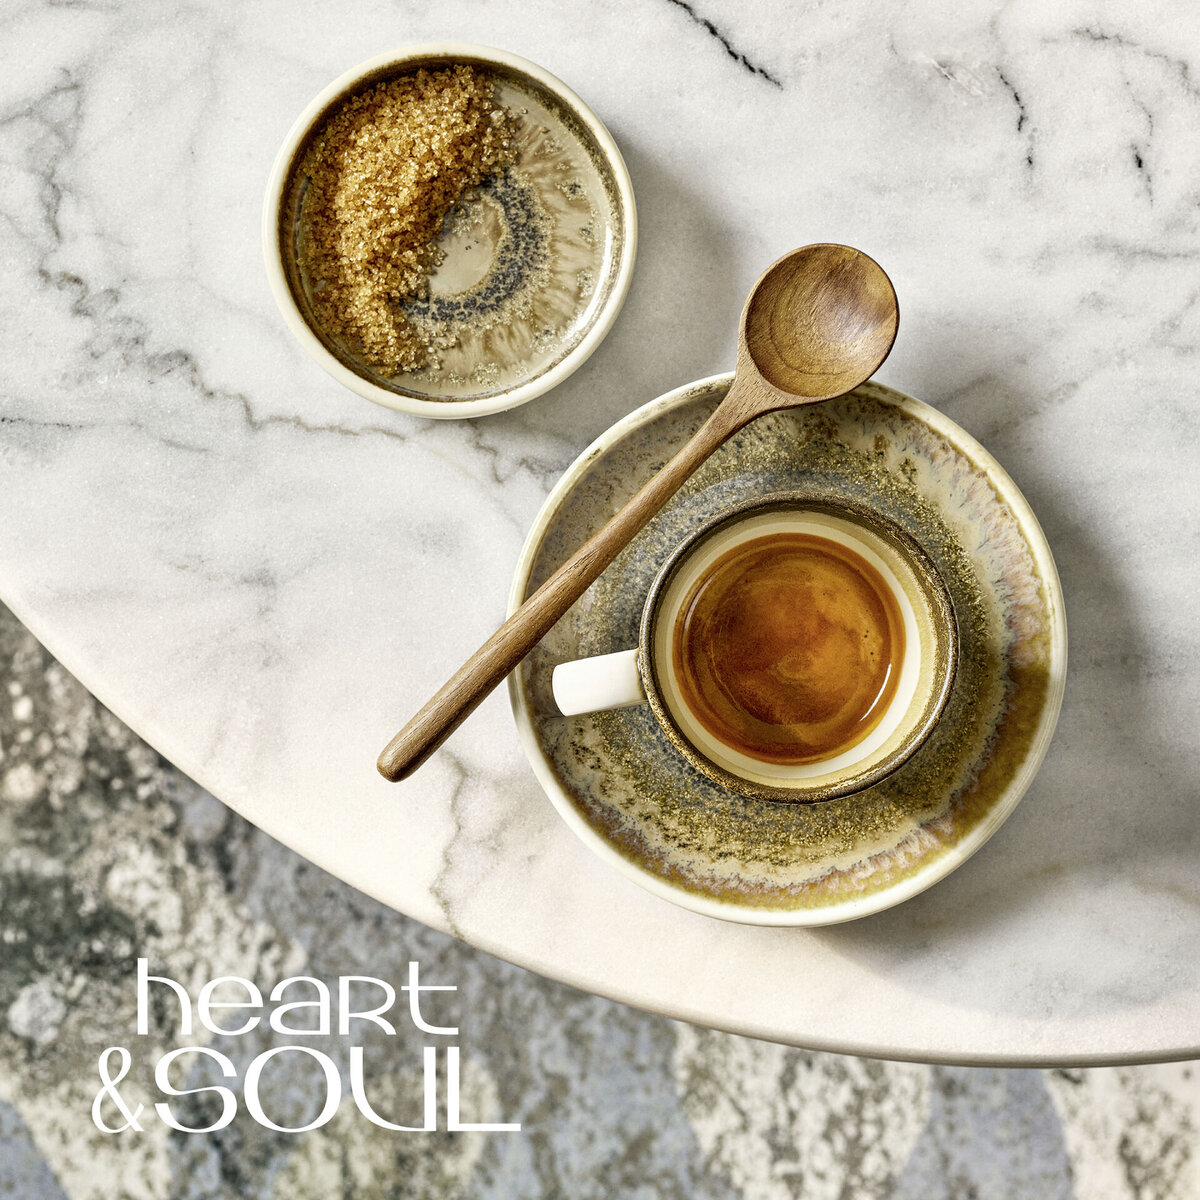 "Heart & Soul" Cumin Tasse untere Kaffee/Cappuccino (1)